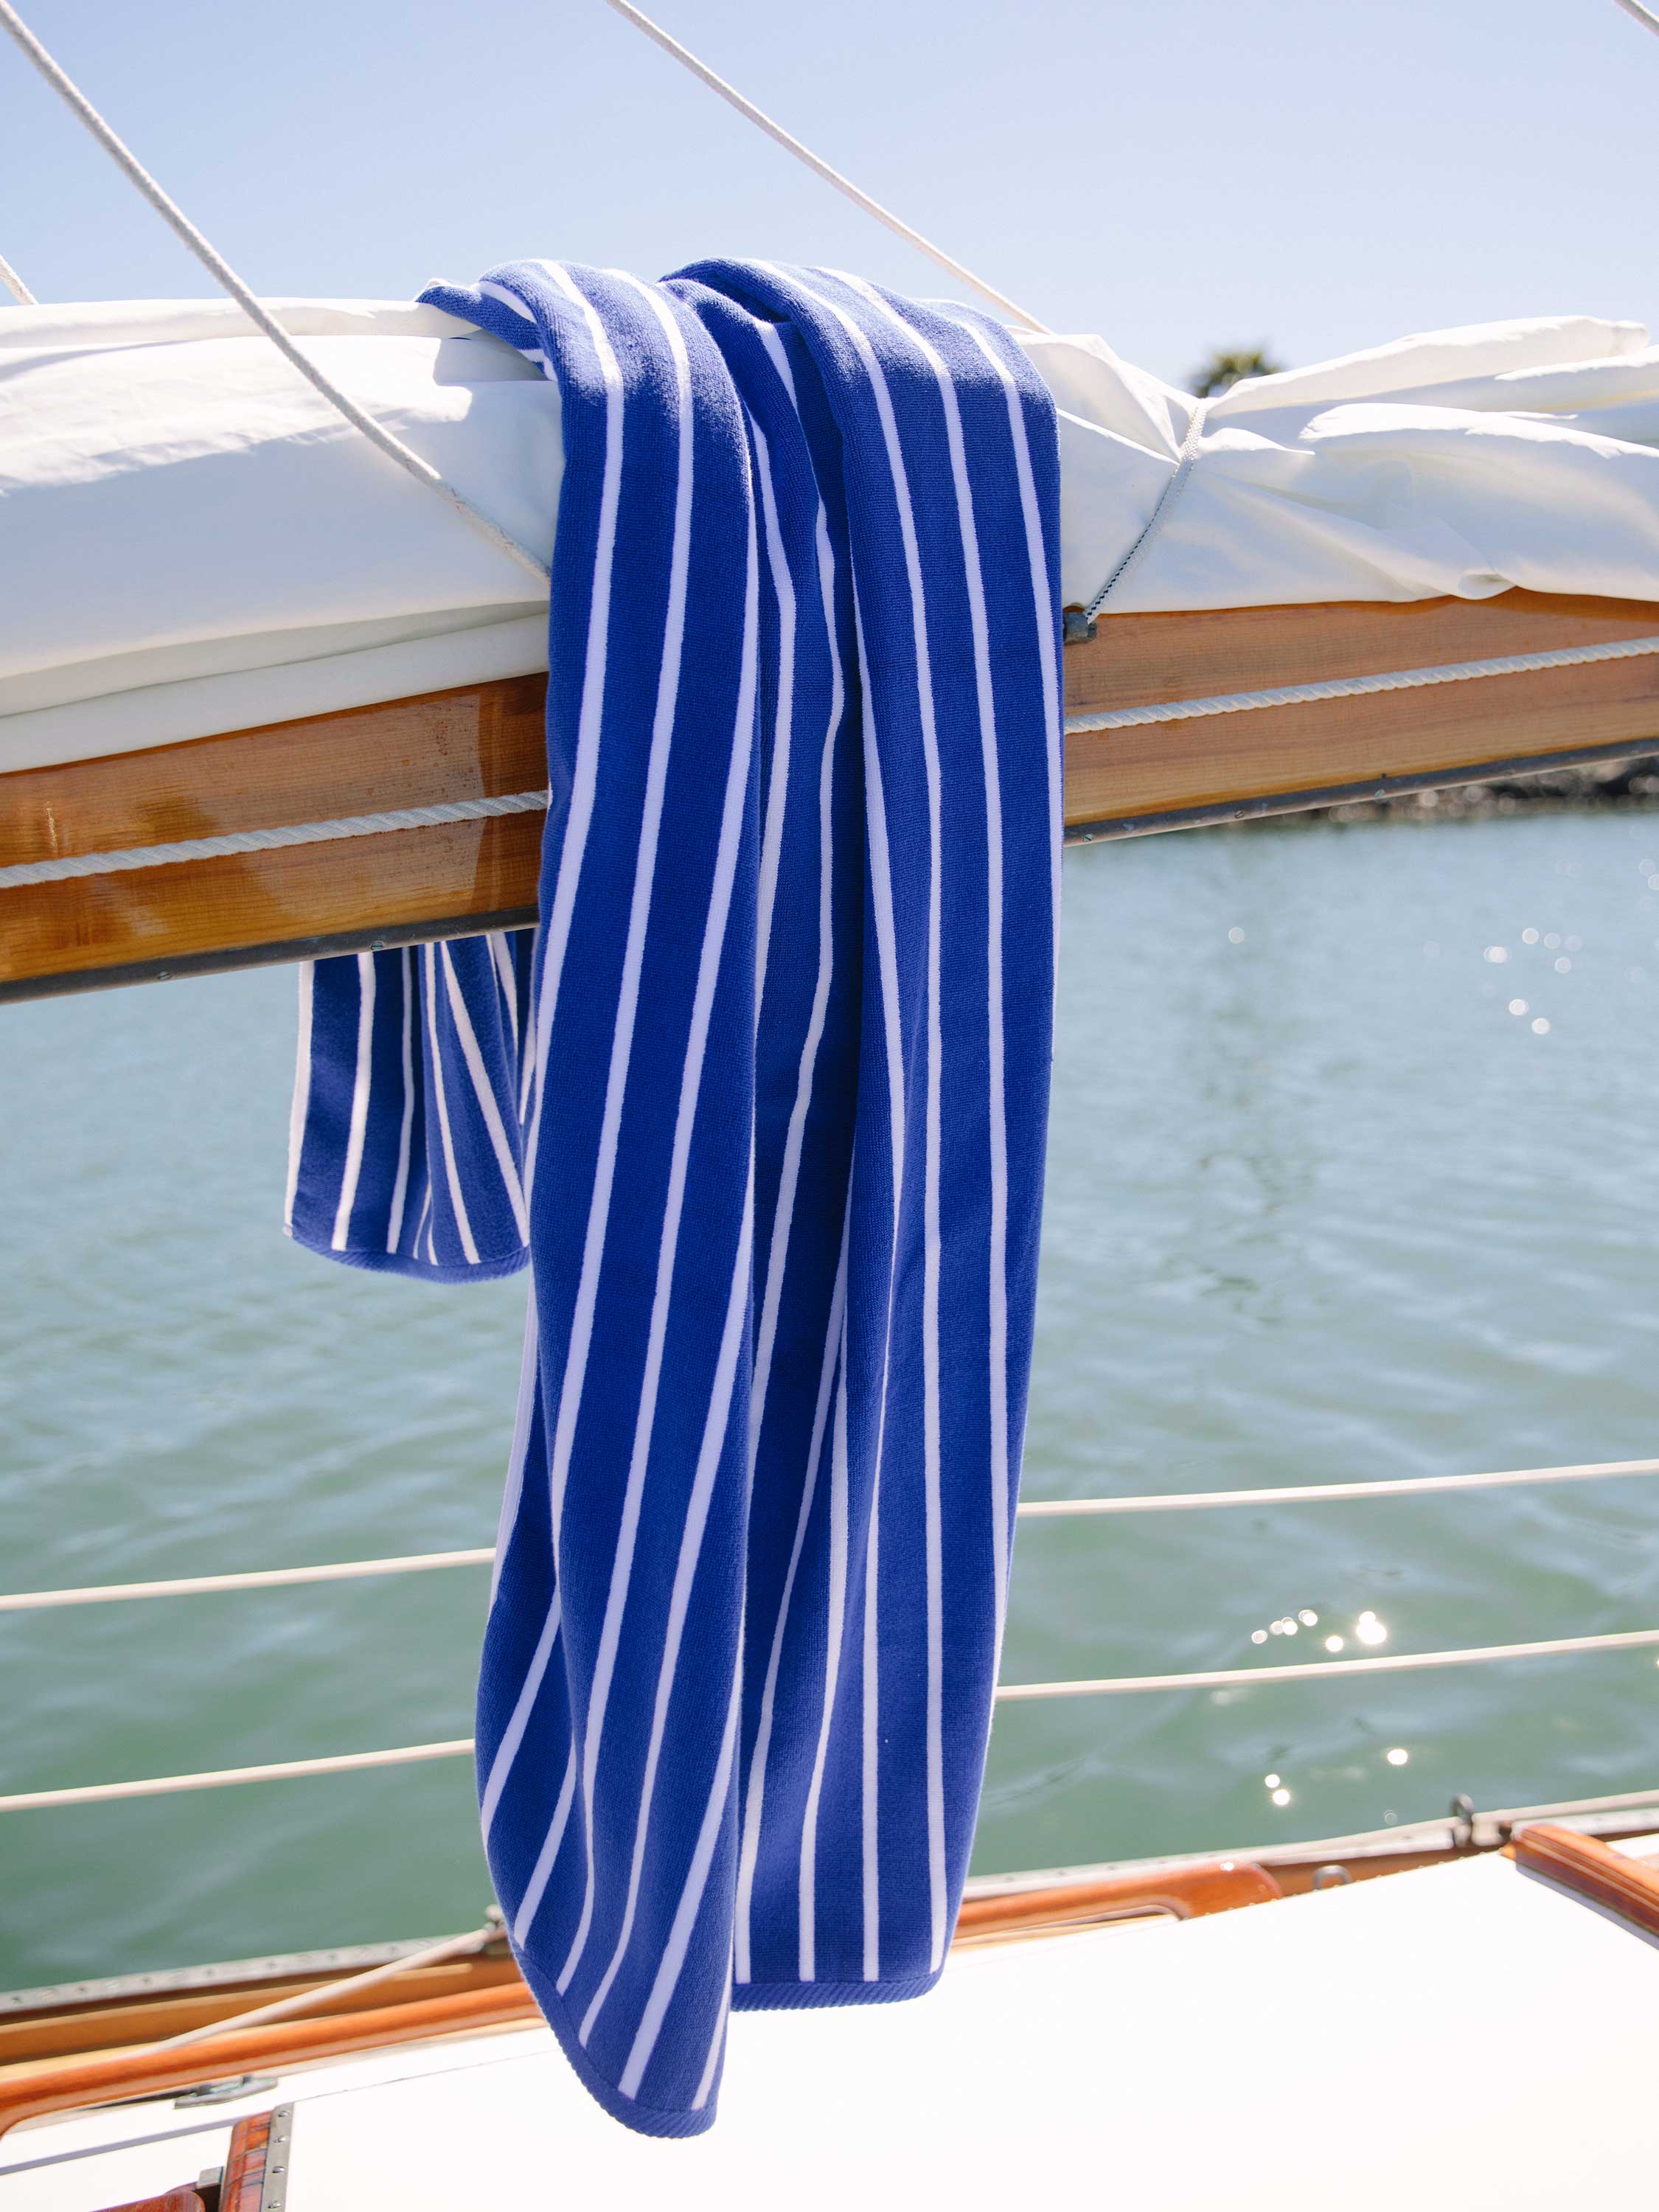 A royal blue striped Cabana Towel draped on the side of a boat.